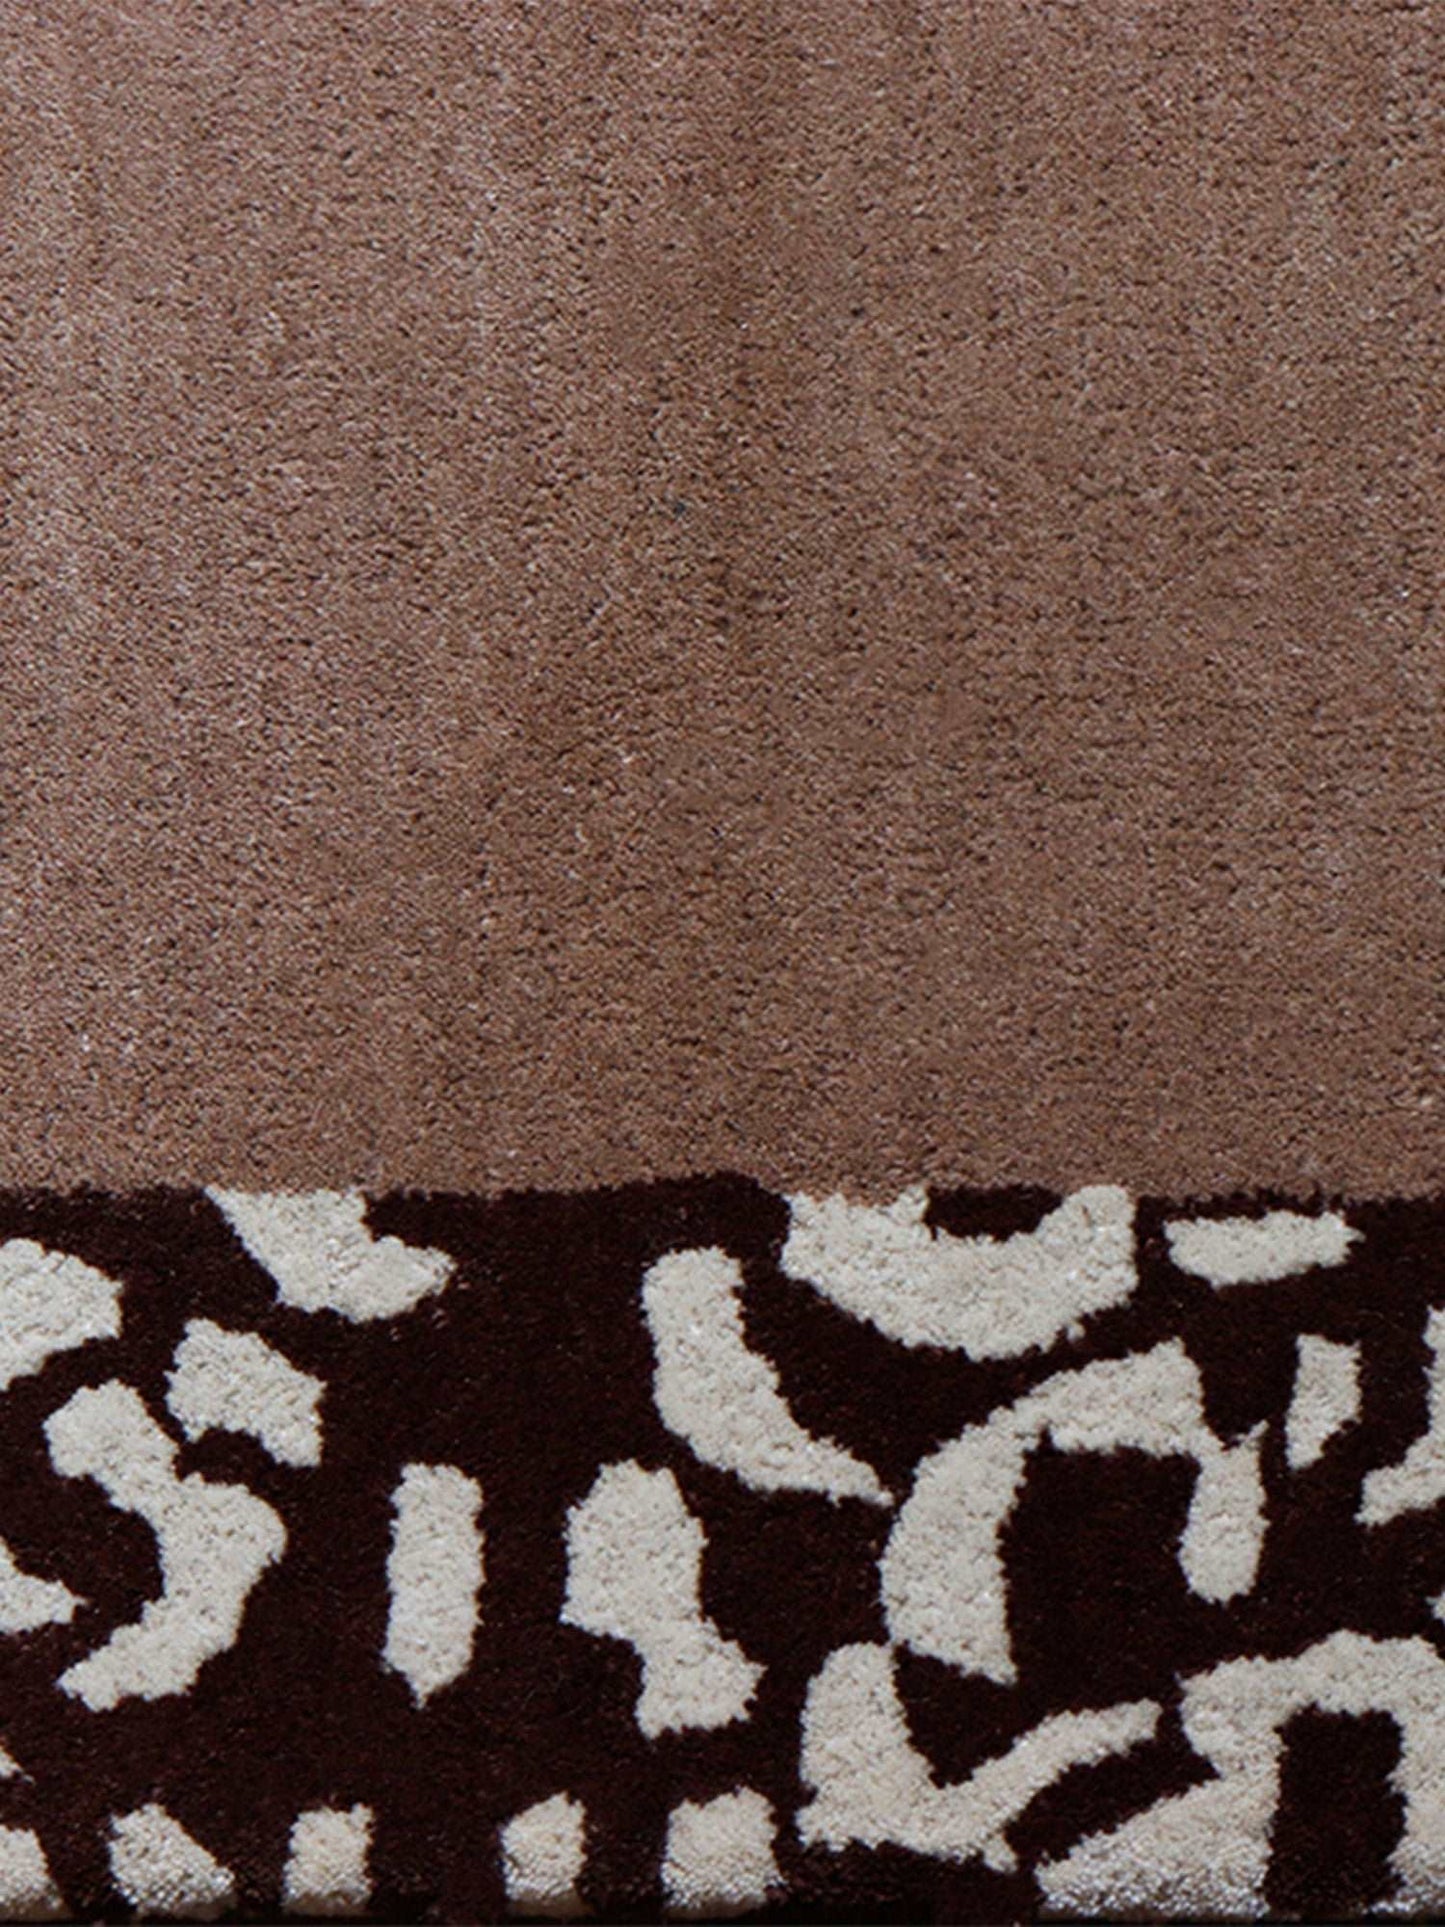 Carpet Hand Tufted 100% Woollen Border Beige And Brown Leopard  - 4ft X 6ft